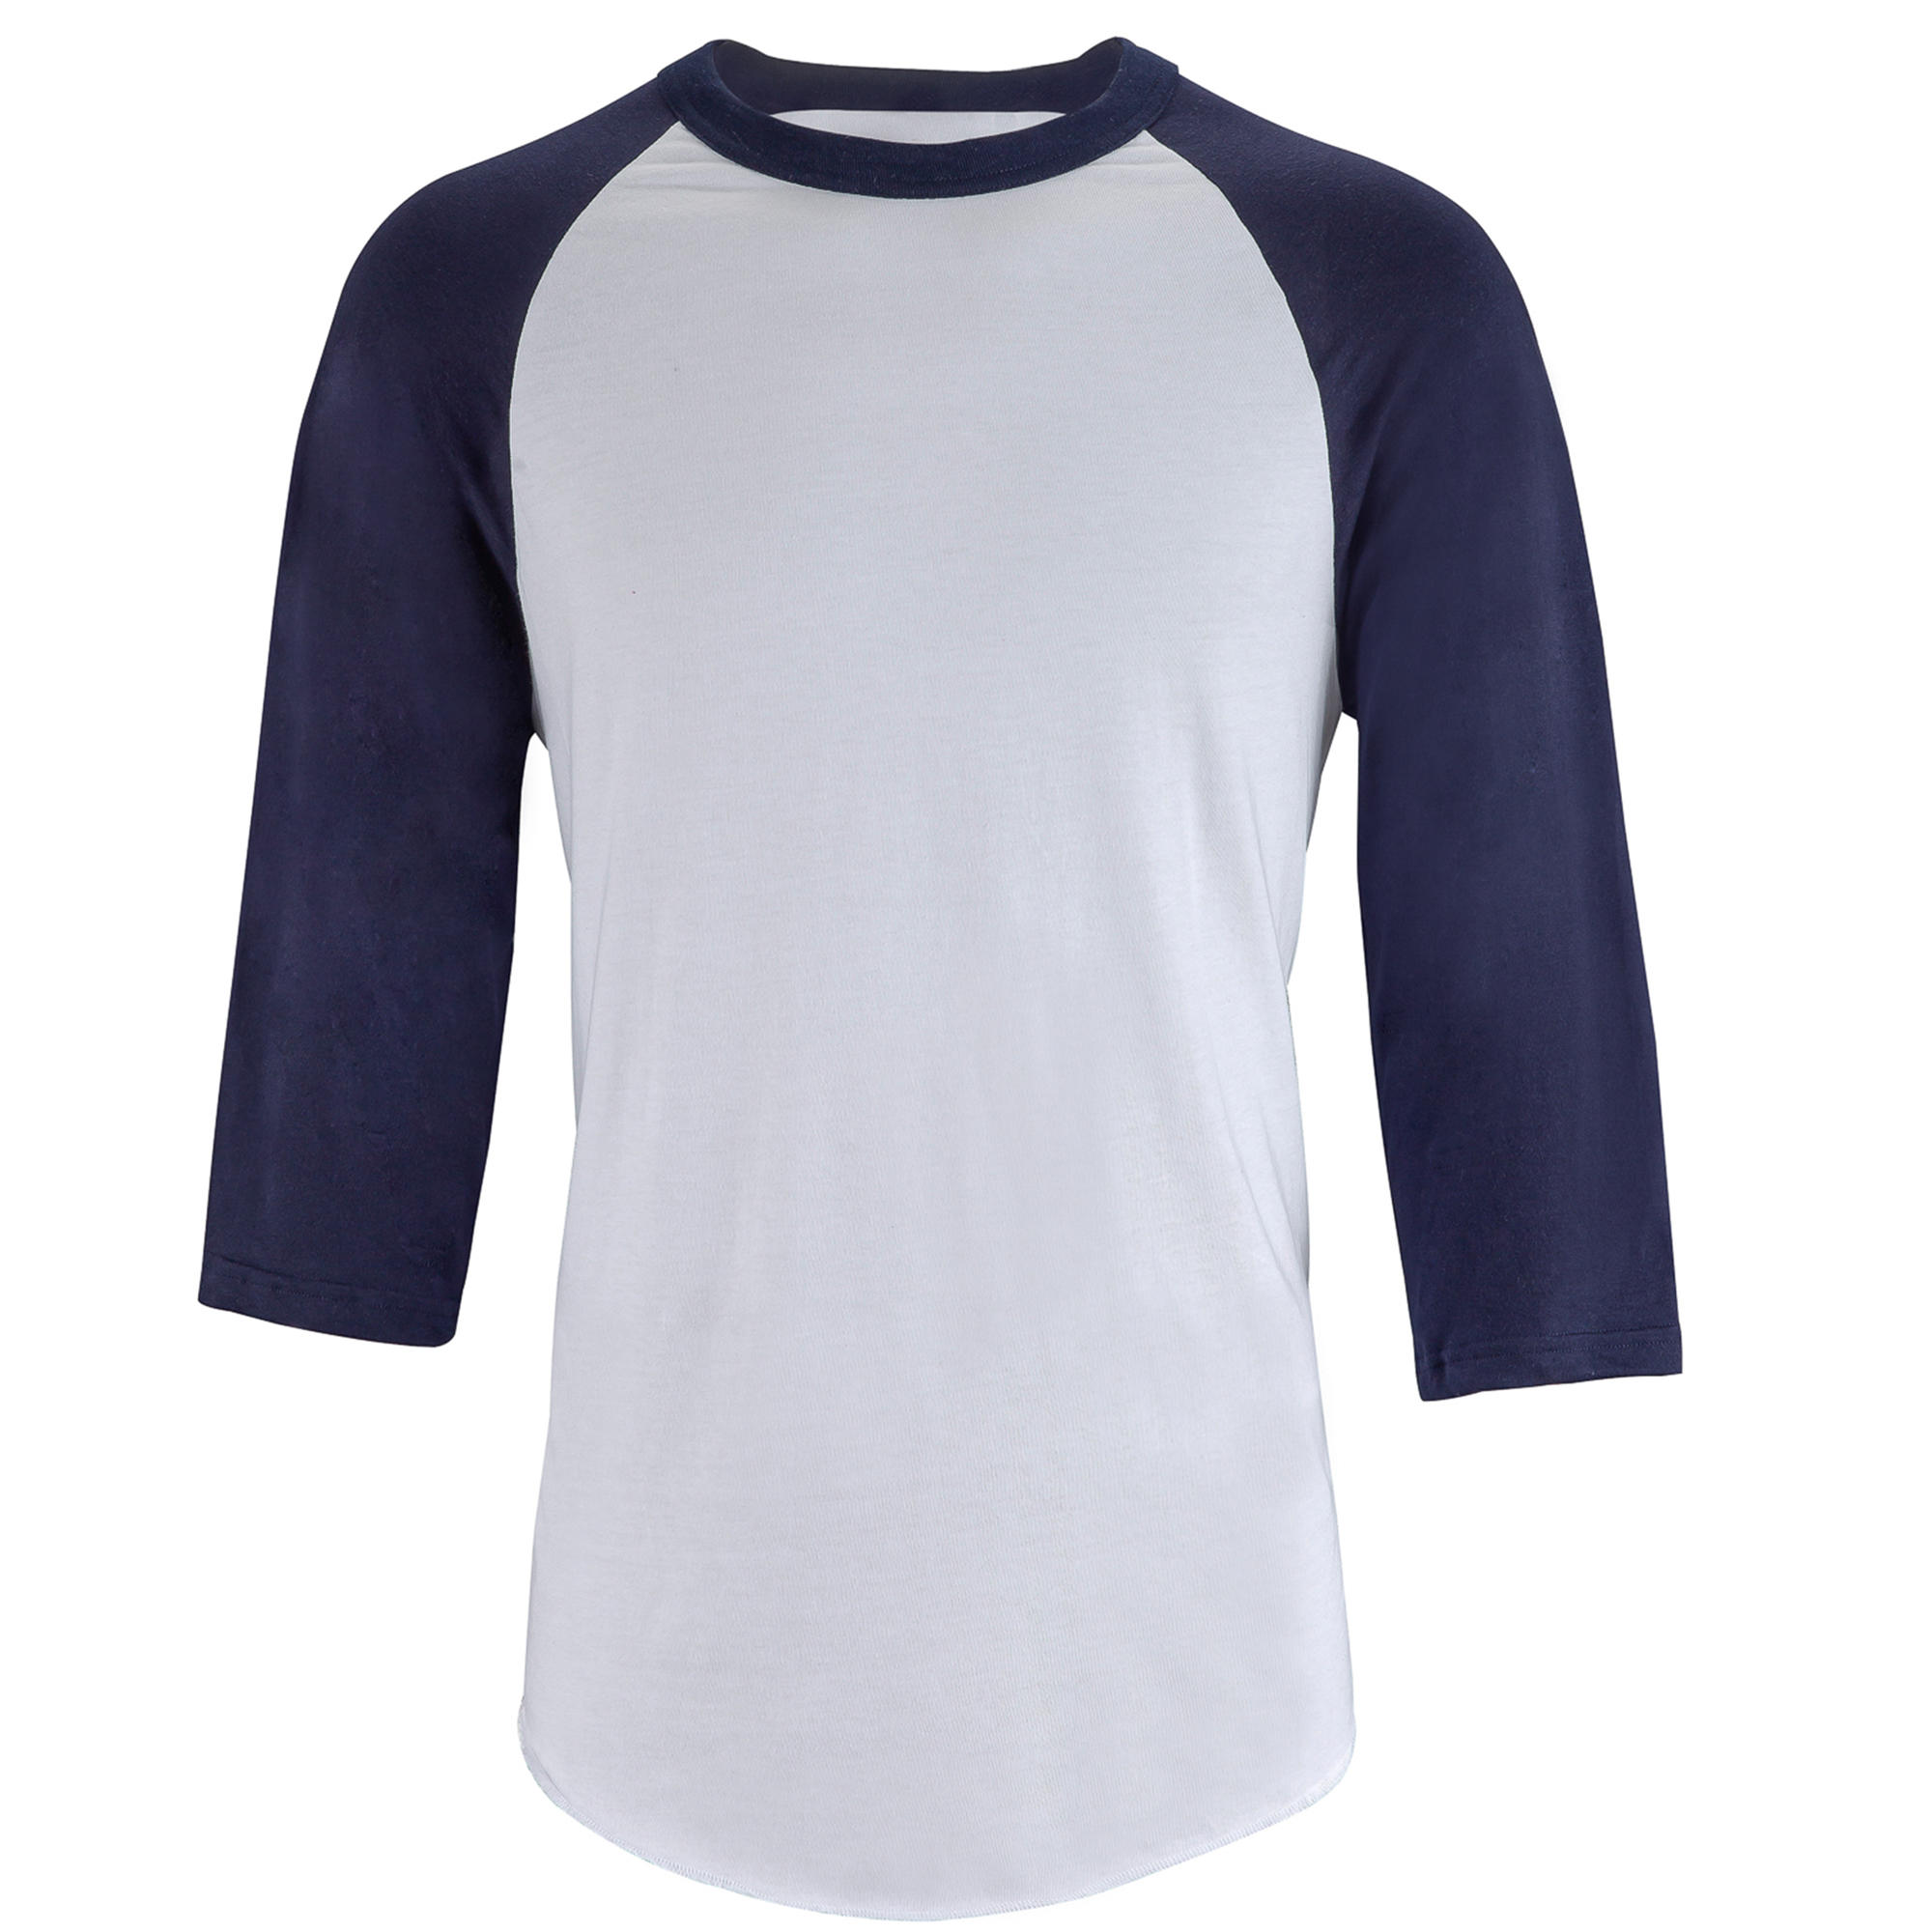 BA 550 Adult 3/4 Sleeve Baseball T-Shirt - White/Blue 2/4